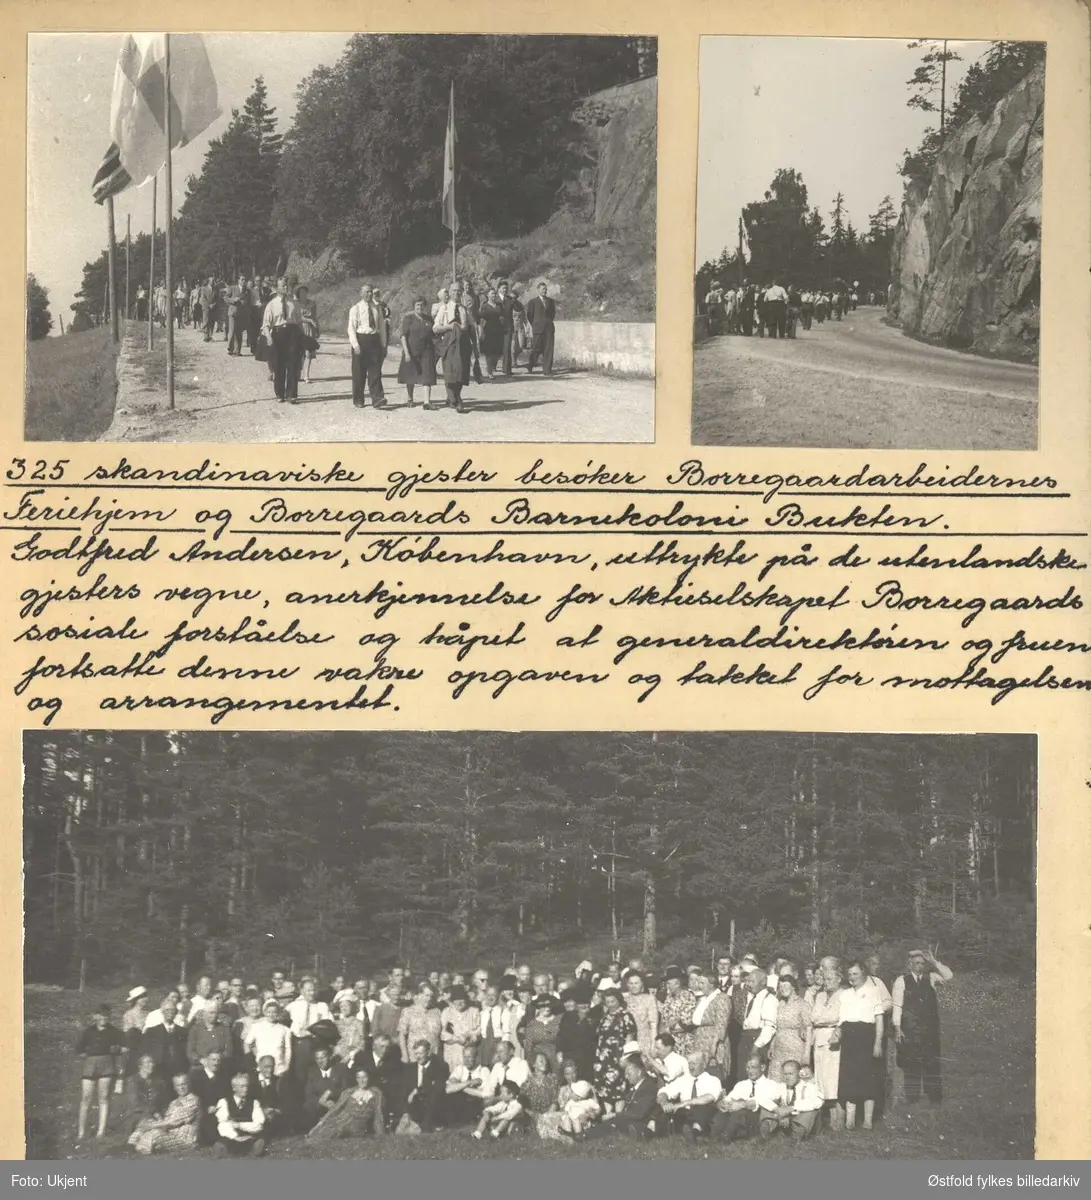 Bilder fra fotoalbum (23 x 25 cm) Nordisk kolonihagekongress i Sarpsborg 24-27. juni 1947.
Borregaard kolonihager anlagt på Opsund i 1925.